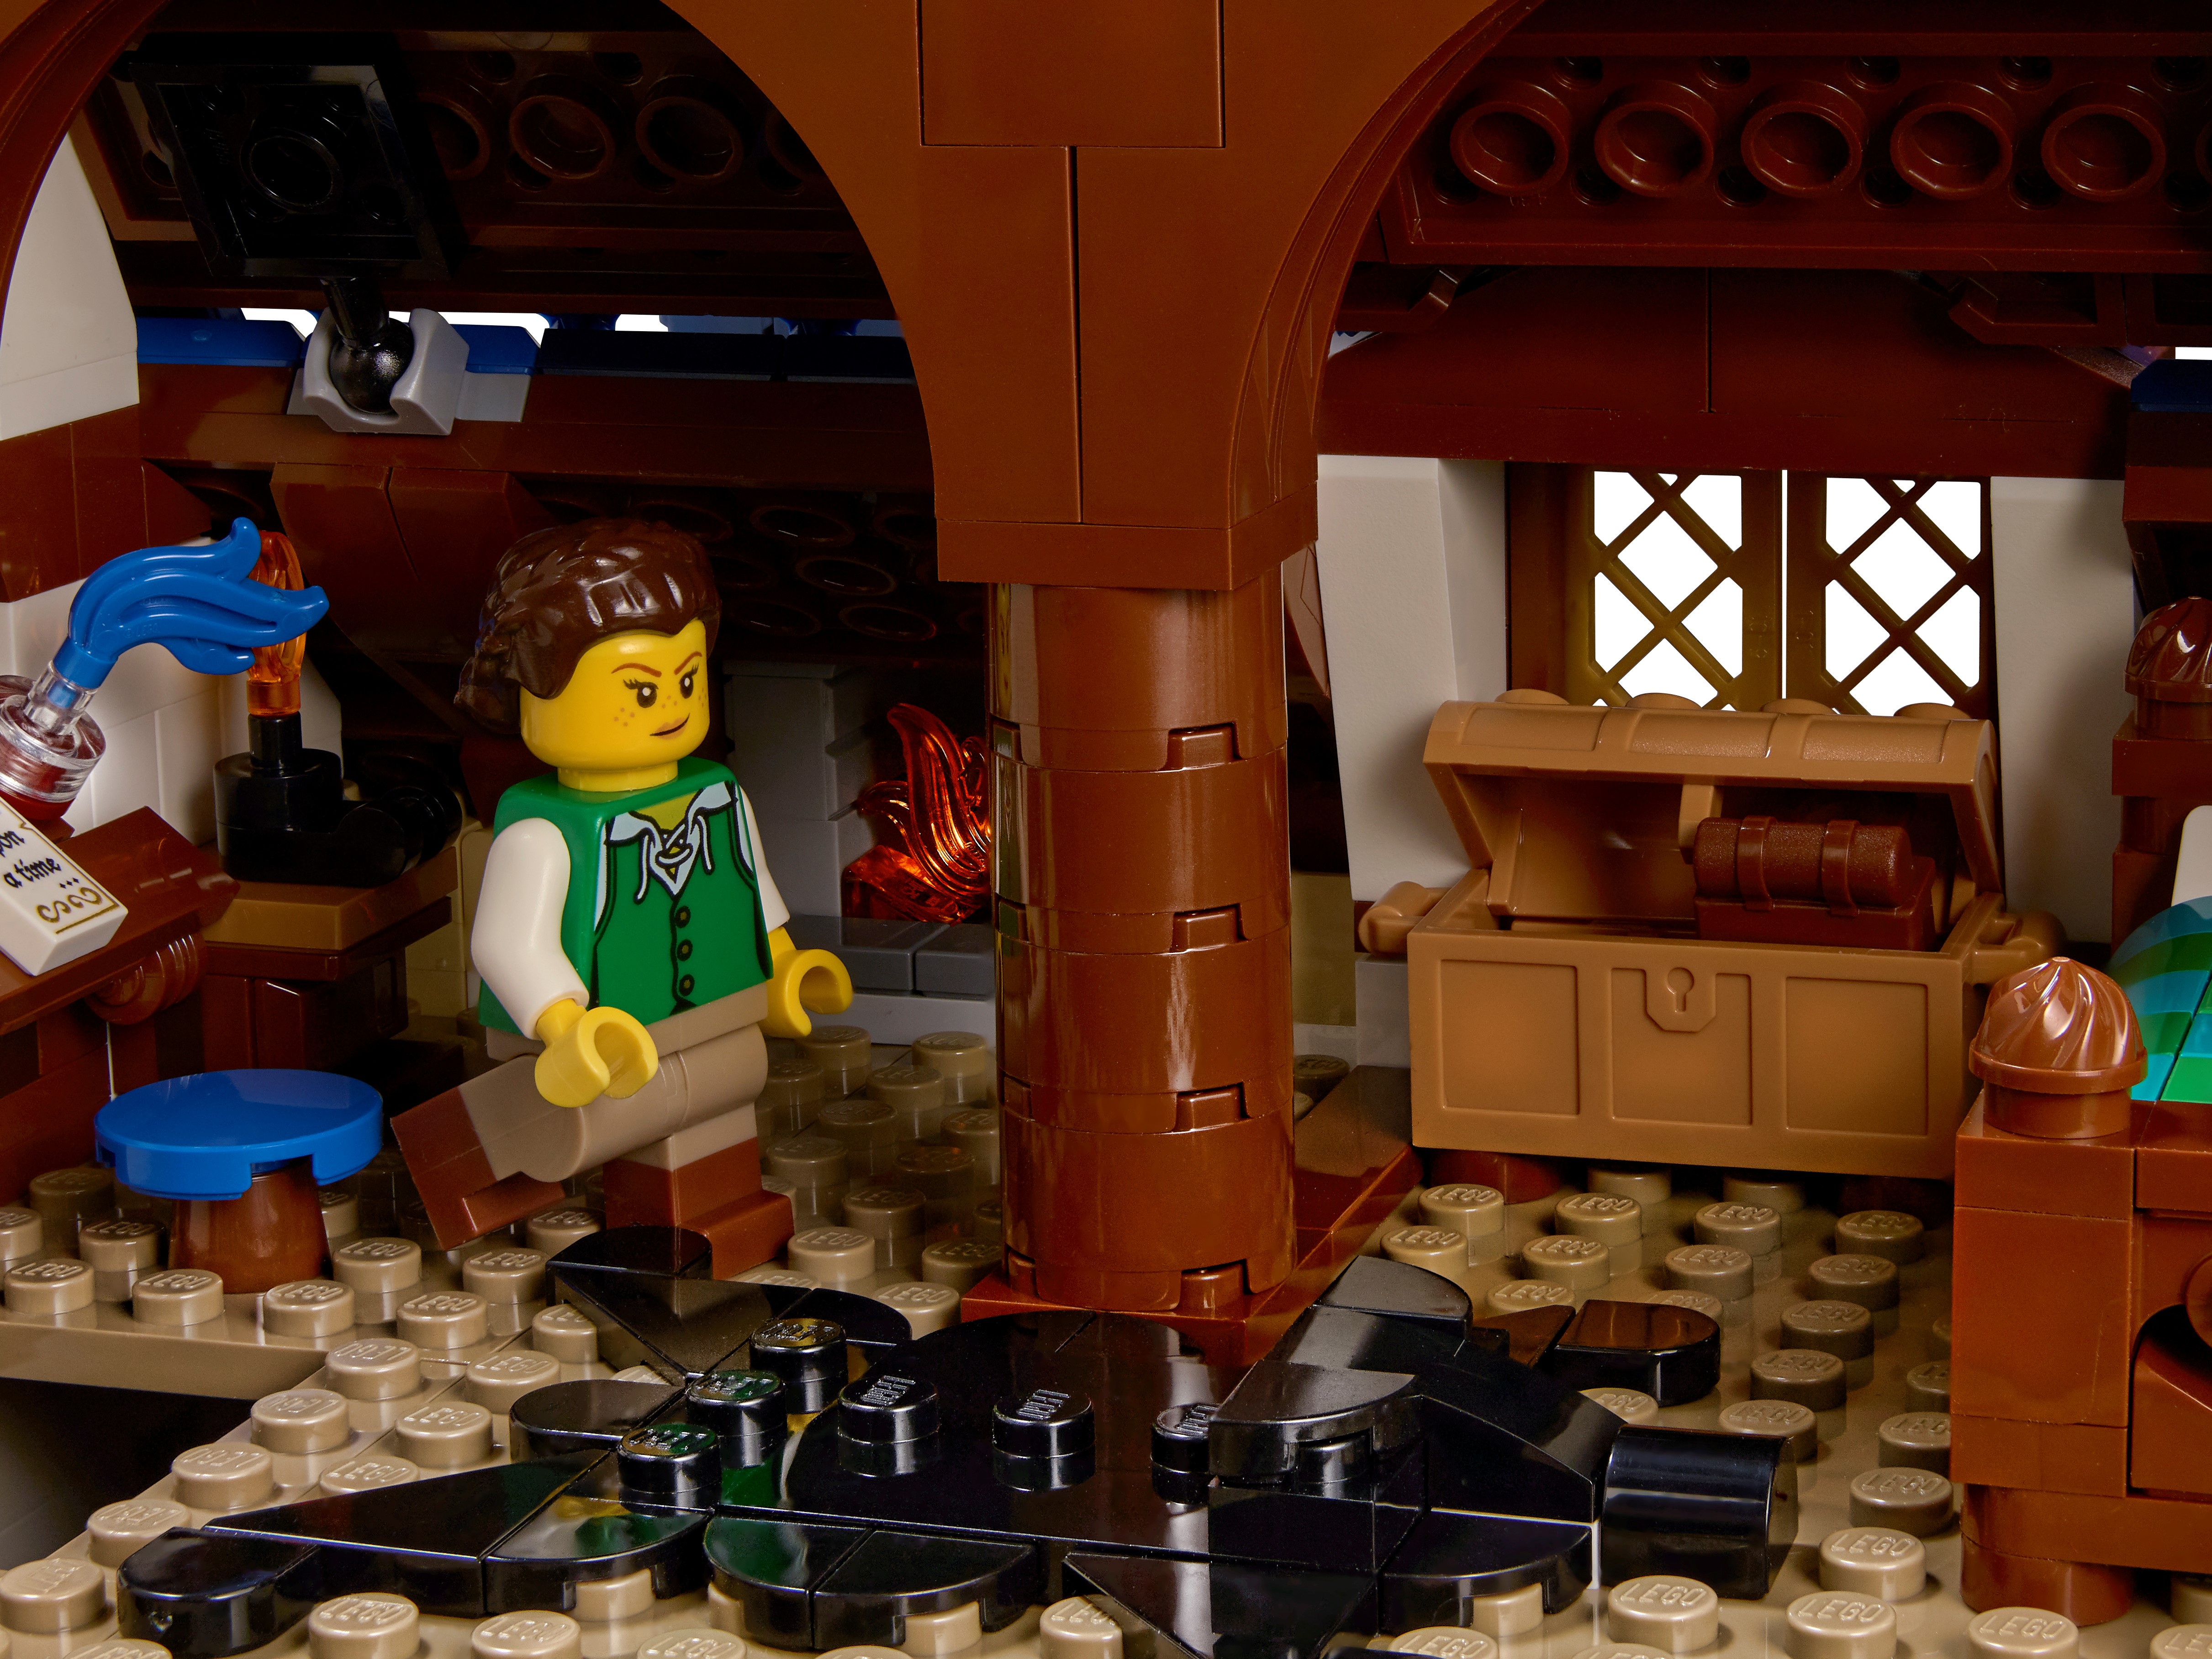 21325 LEGO Ideas Medieval Blacksmith for sale online